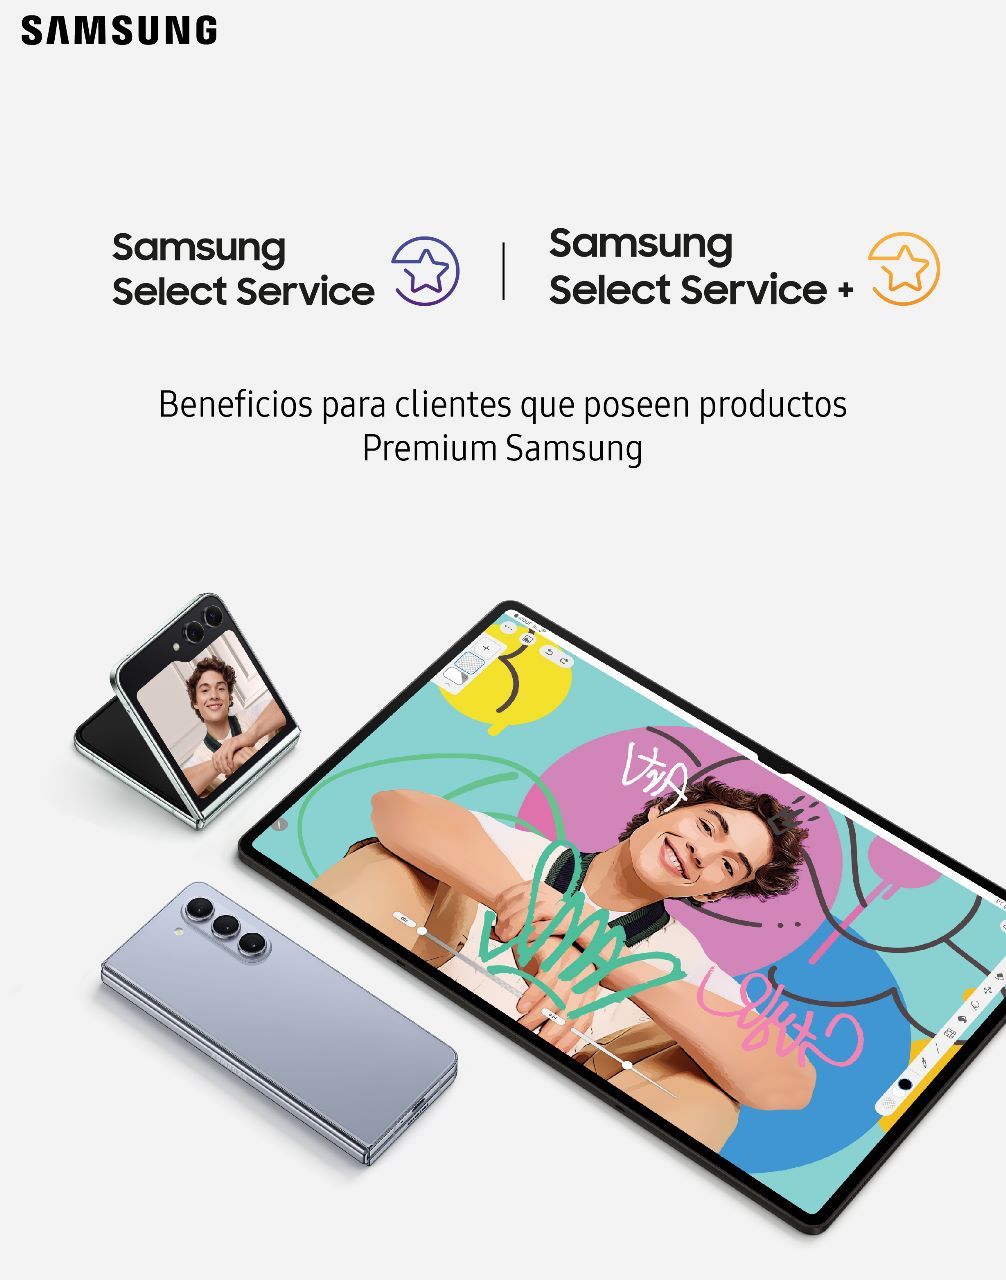 Samsung Select Service+